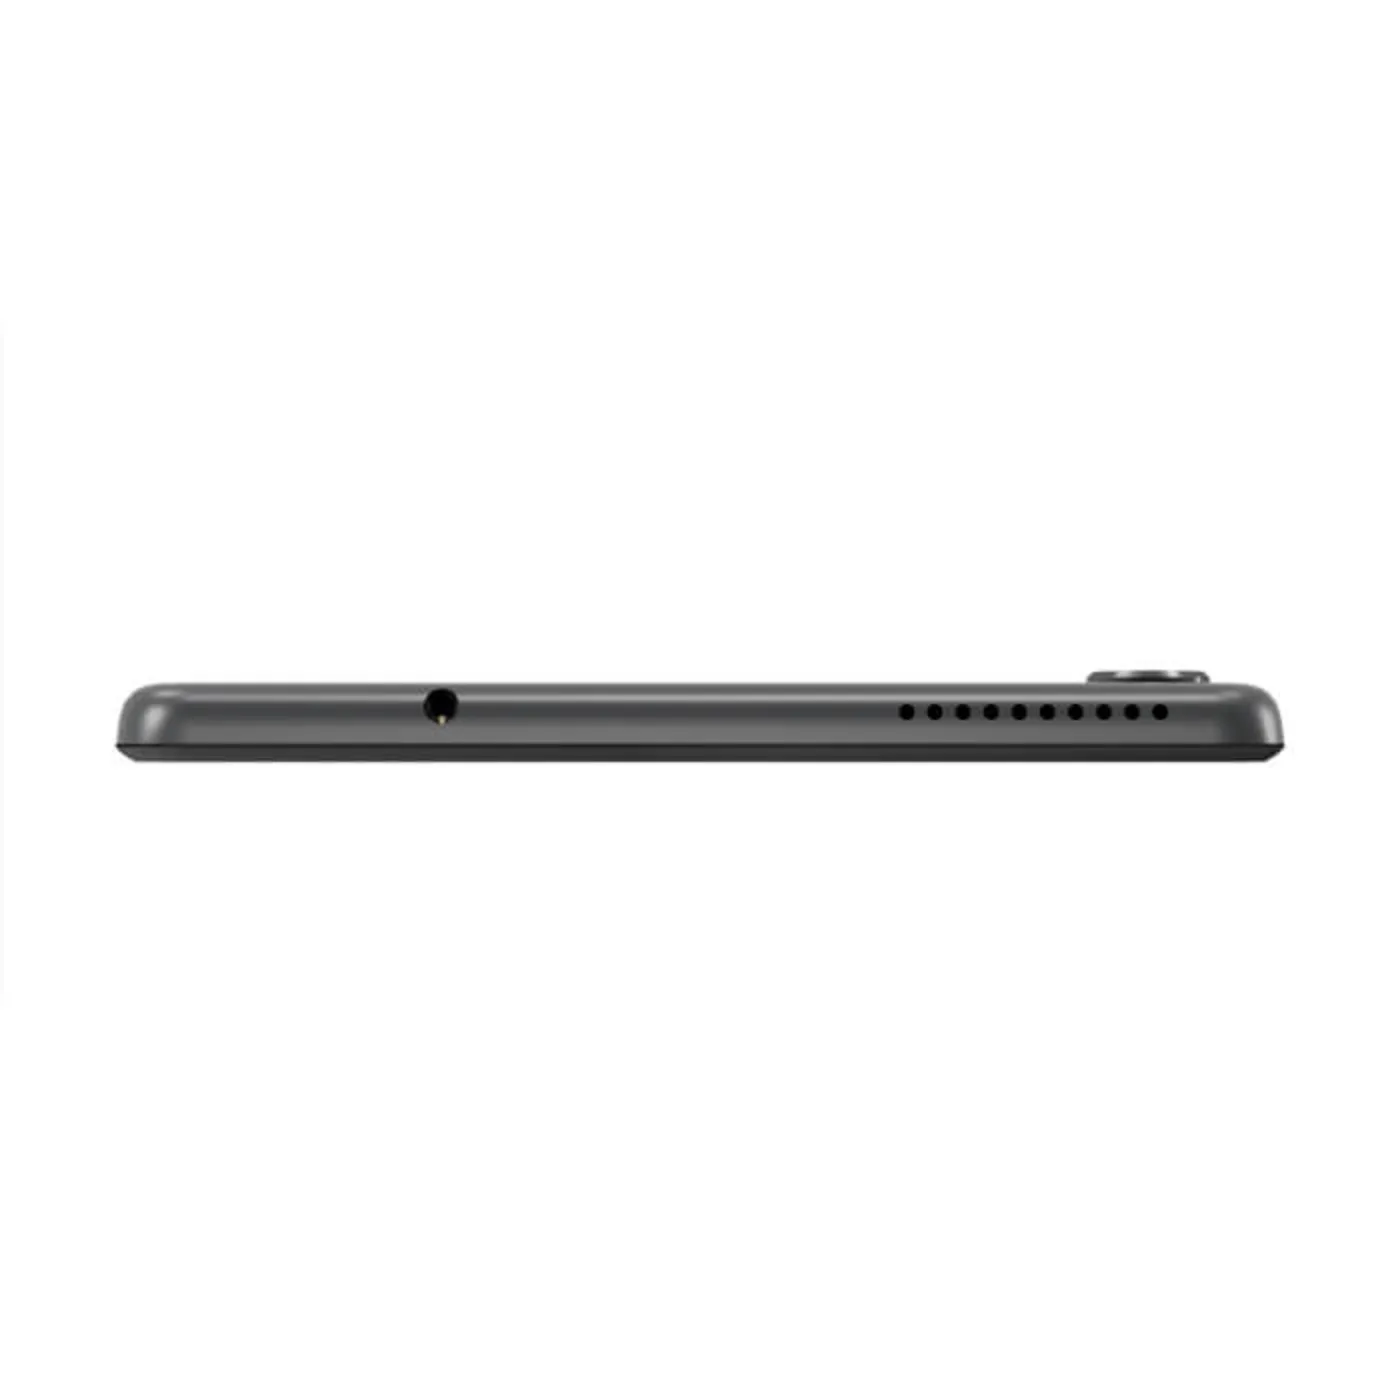 Tablet LENOVO 8" Pulgadas Smart Tab M8 Wifi color Gris